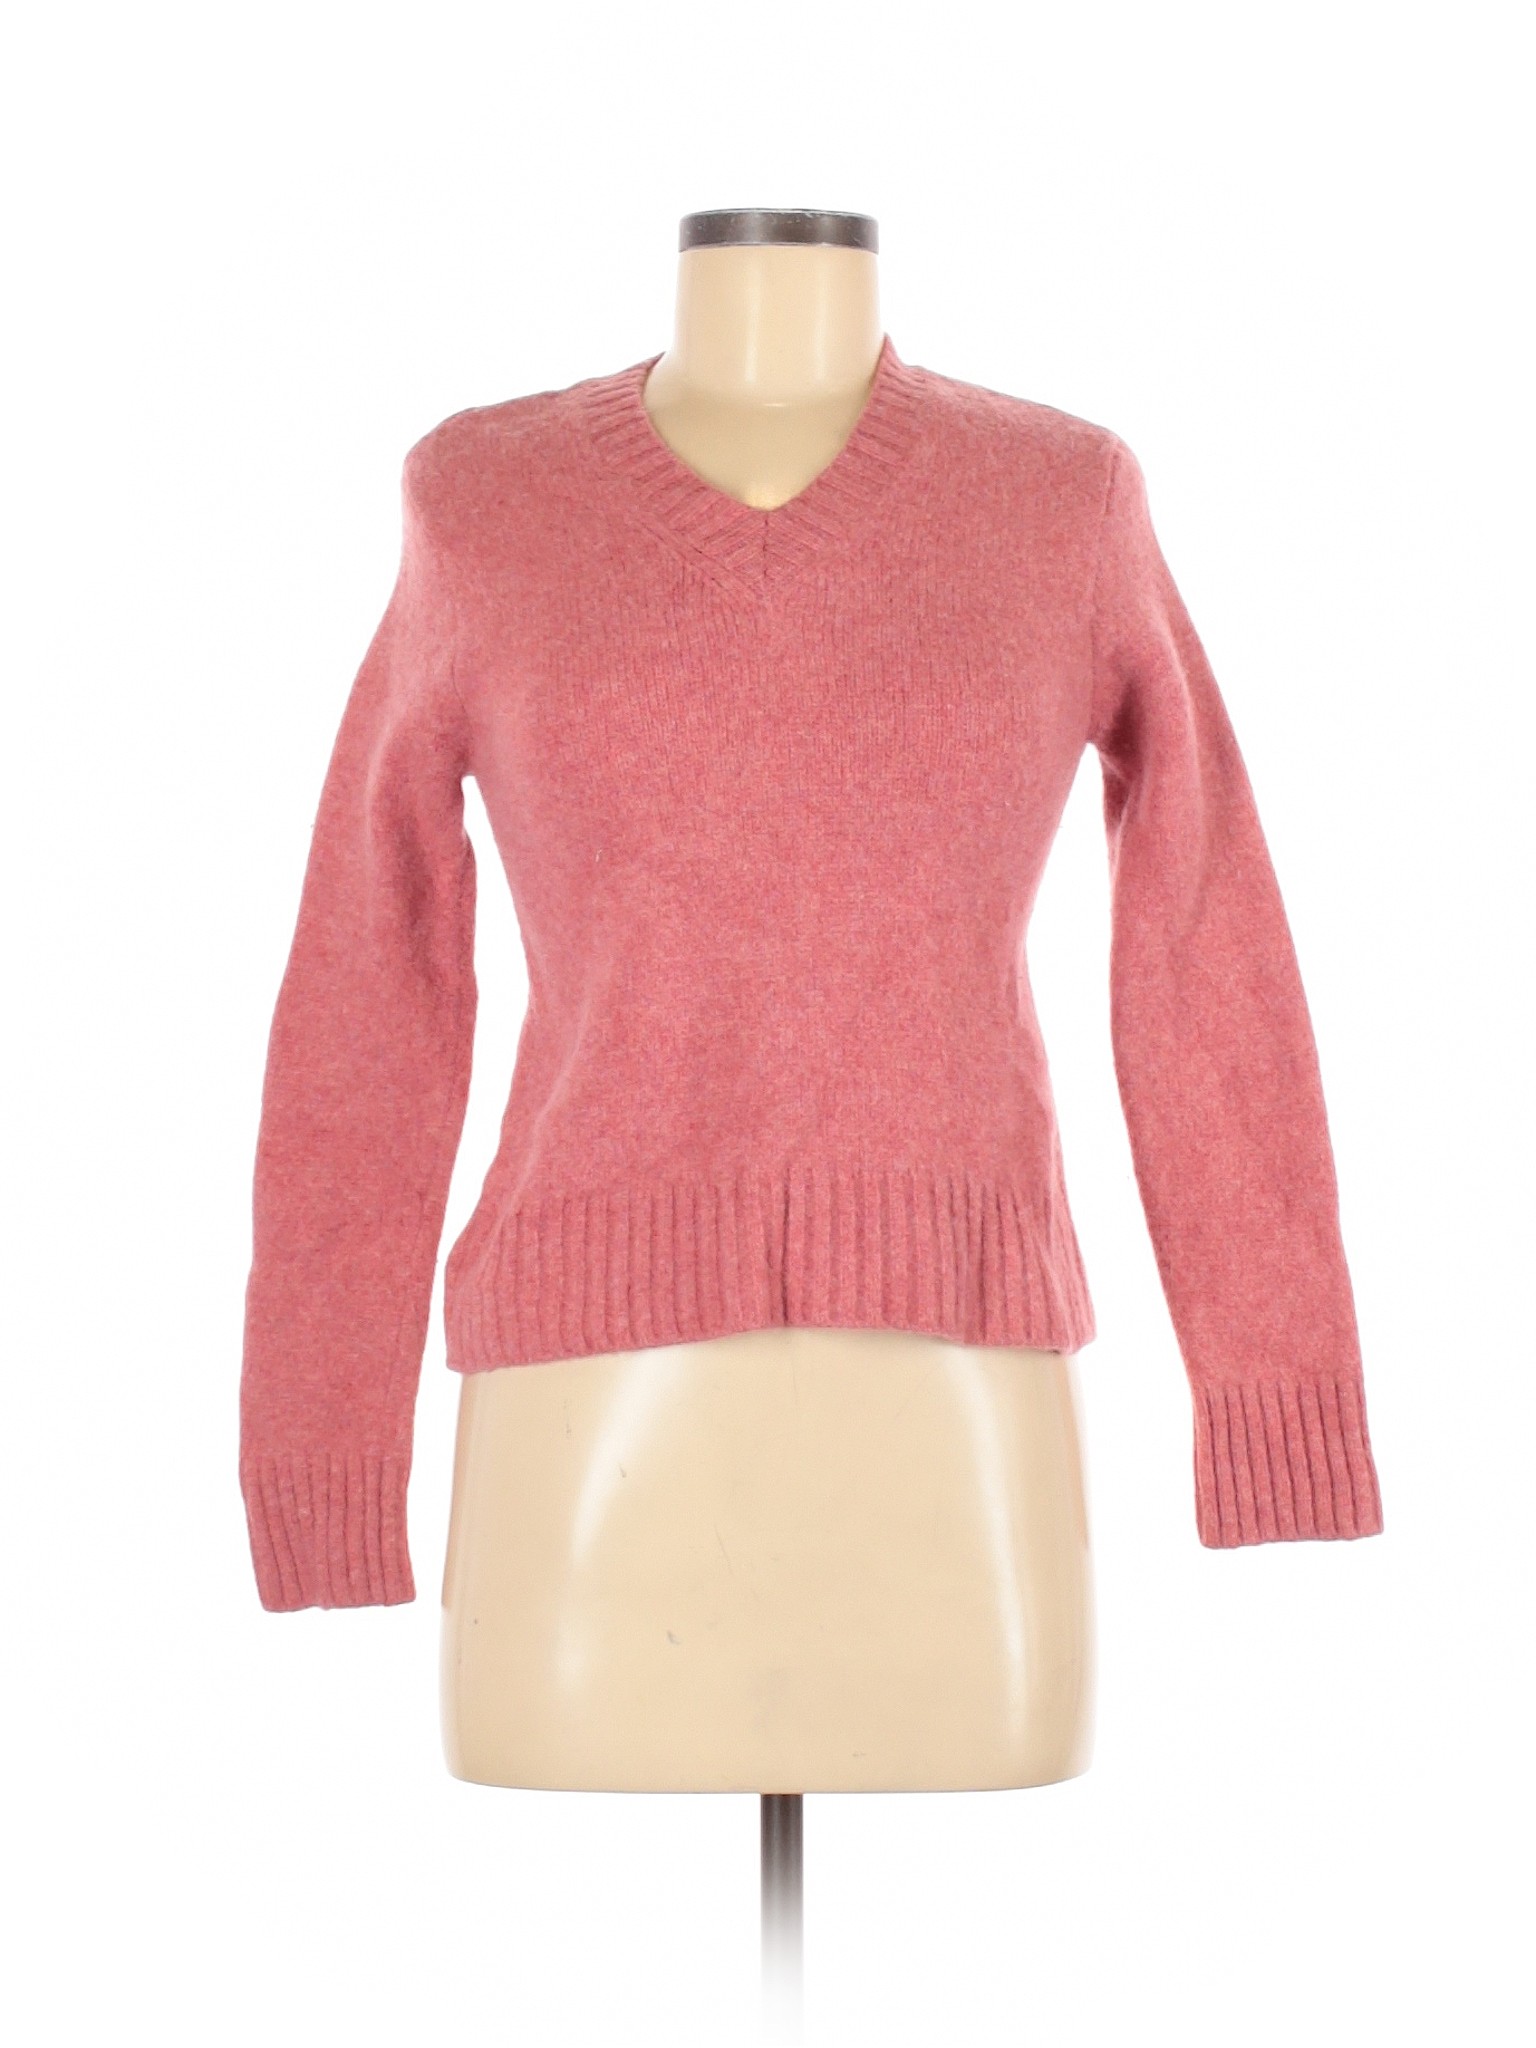 J.Crew Women Pink Wool Pullover Sweater M | eBay